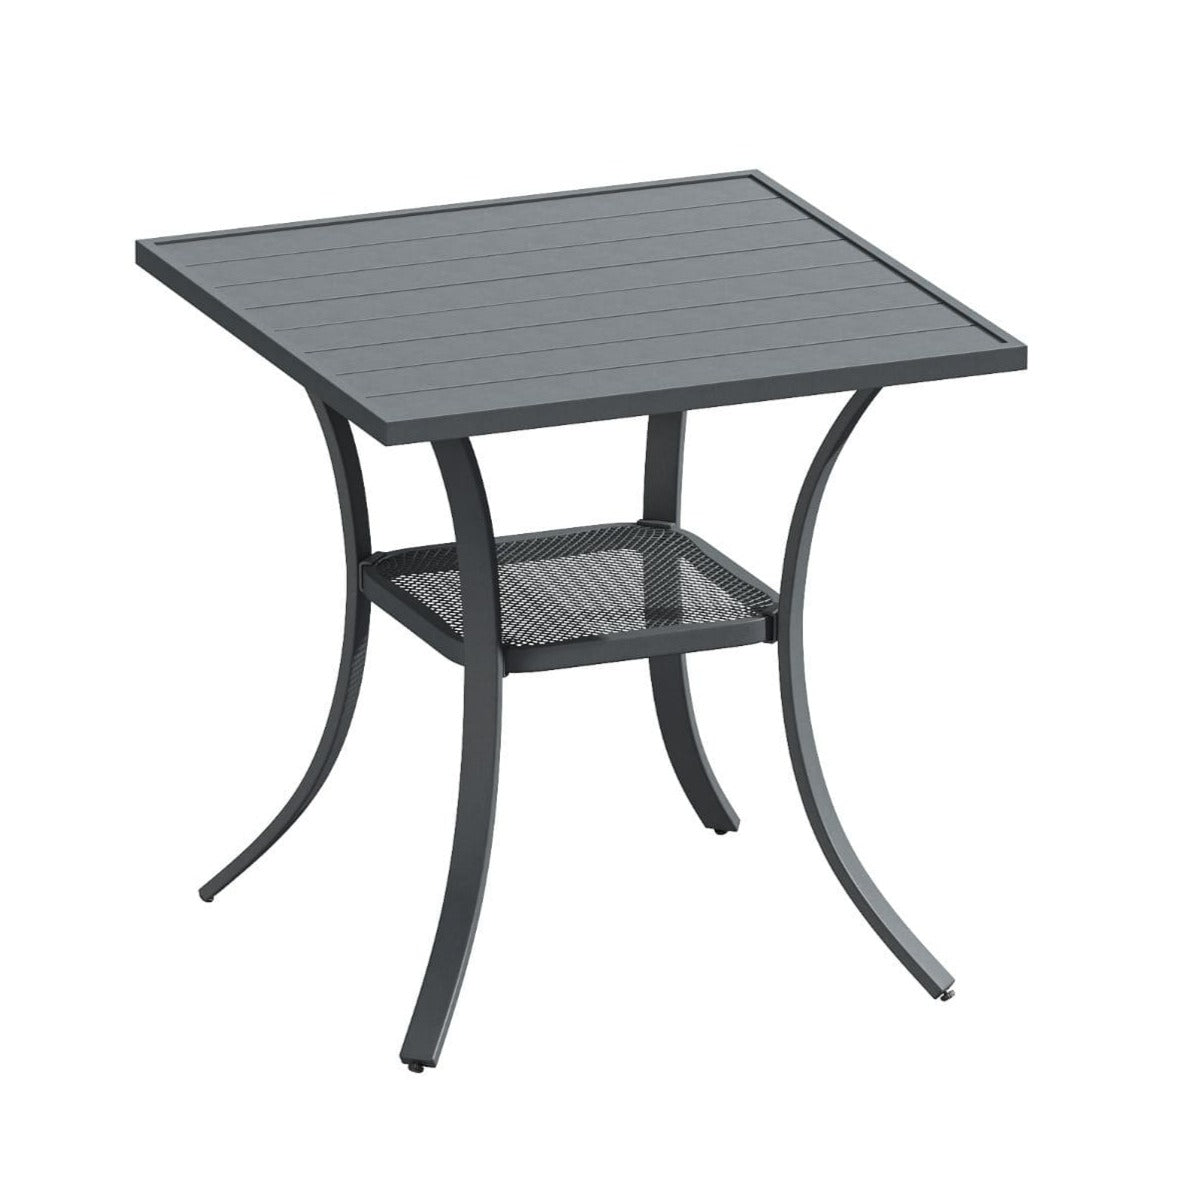 Vicllax Outdoor Small Square Table, Patio Bistro Table